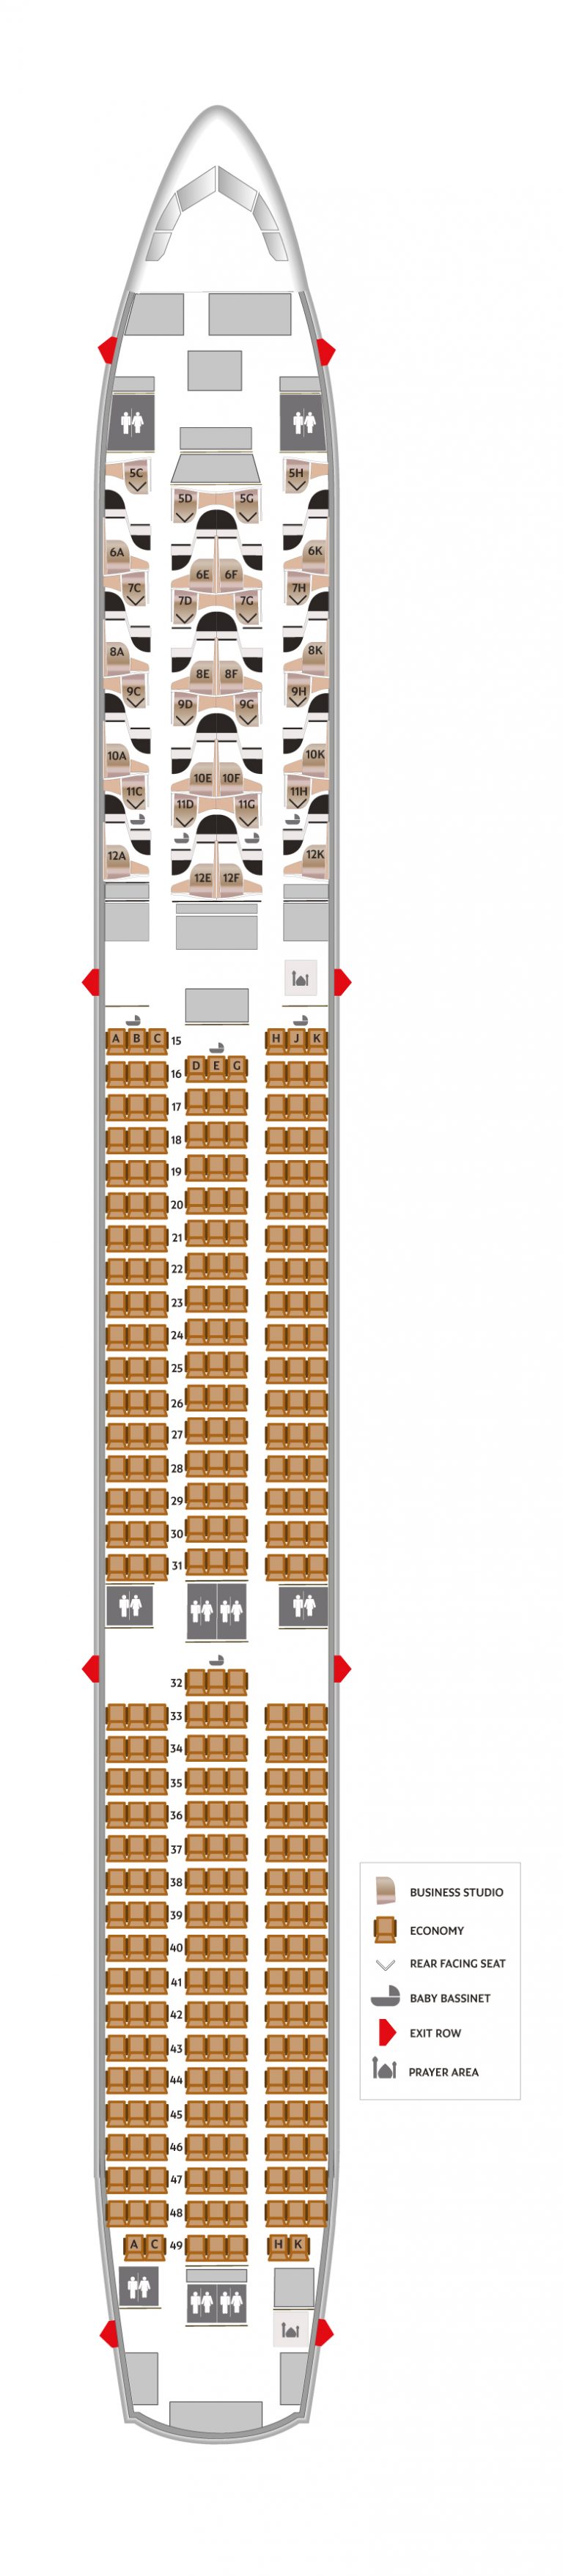 Etihad 787 Seat Map